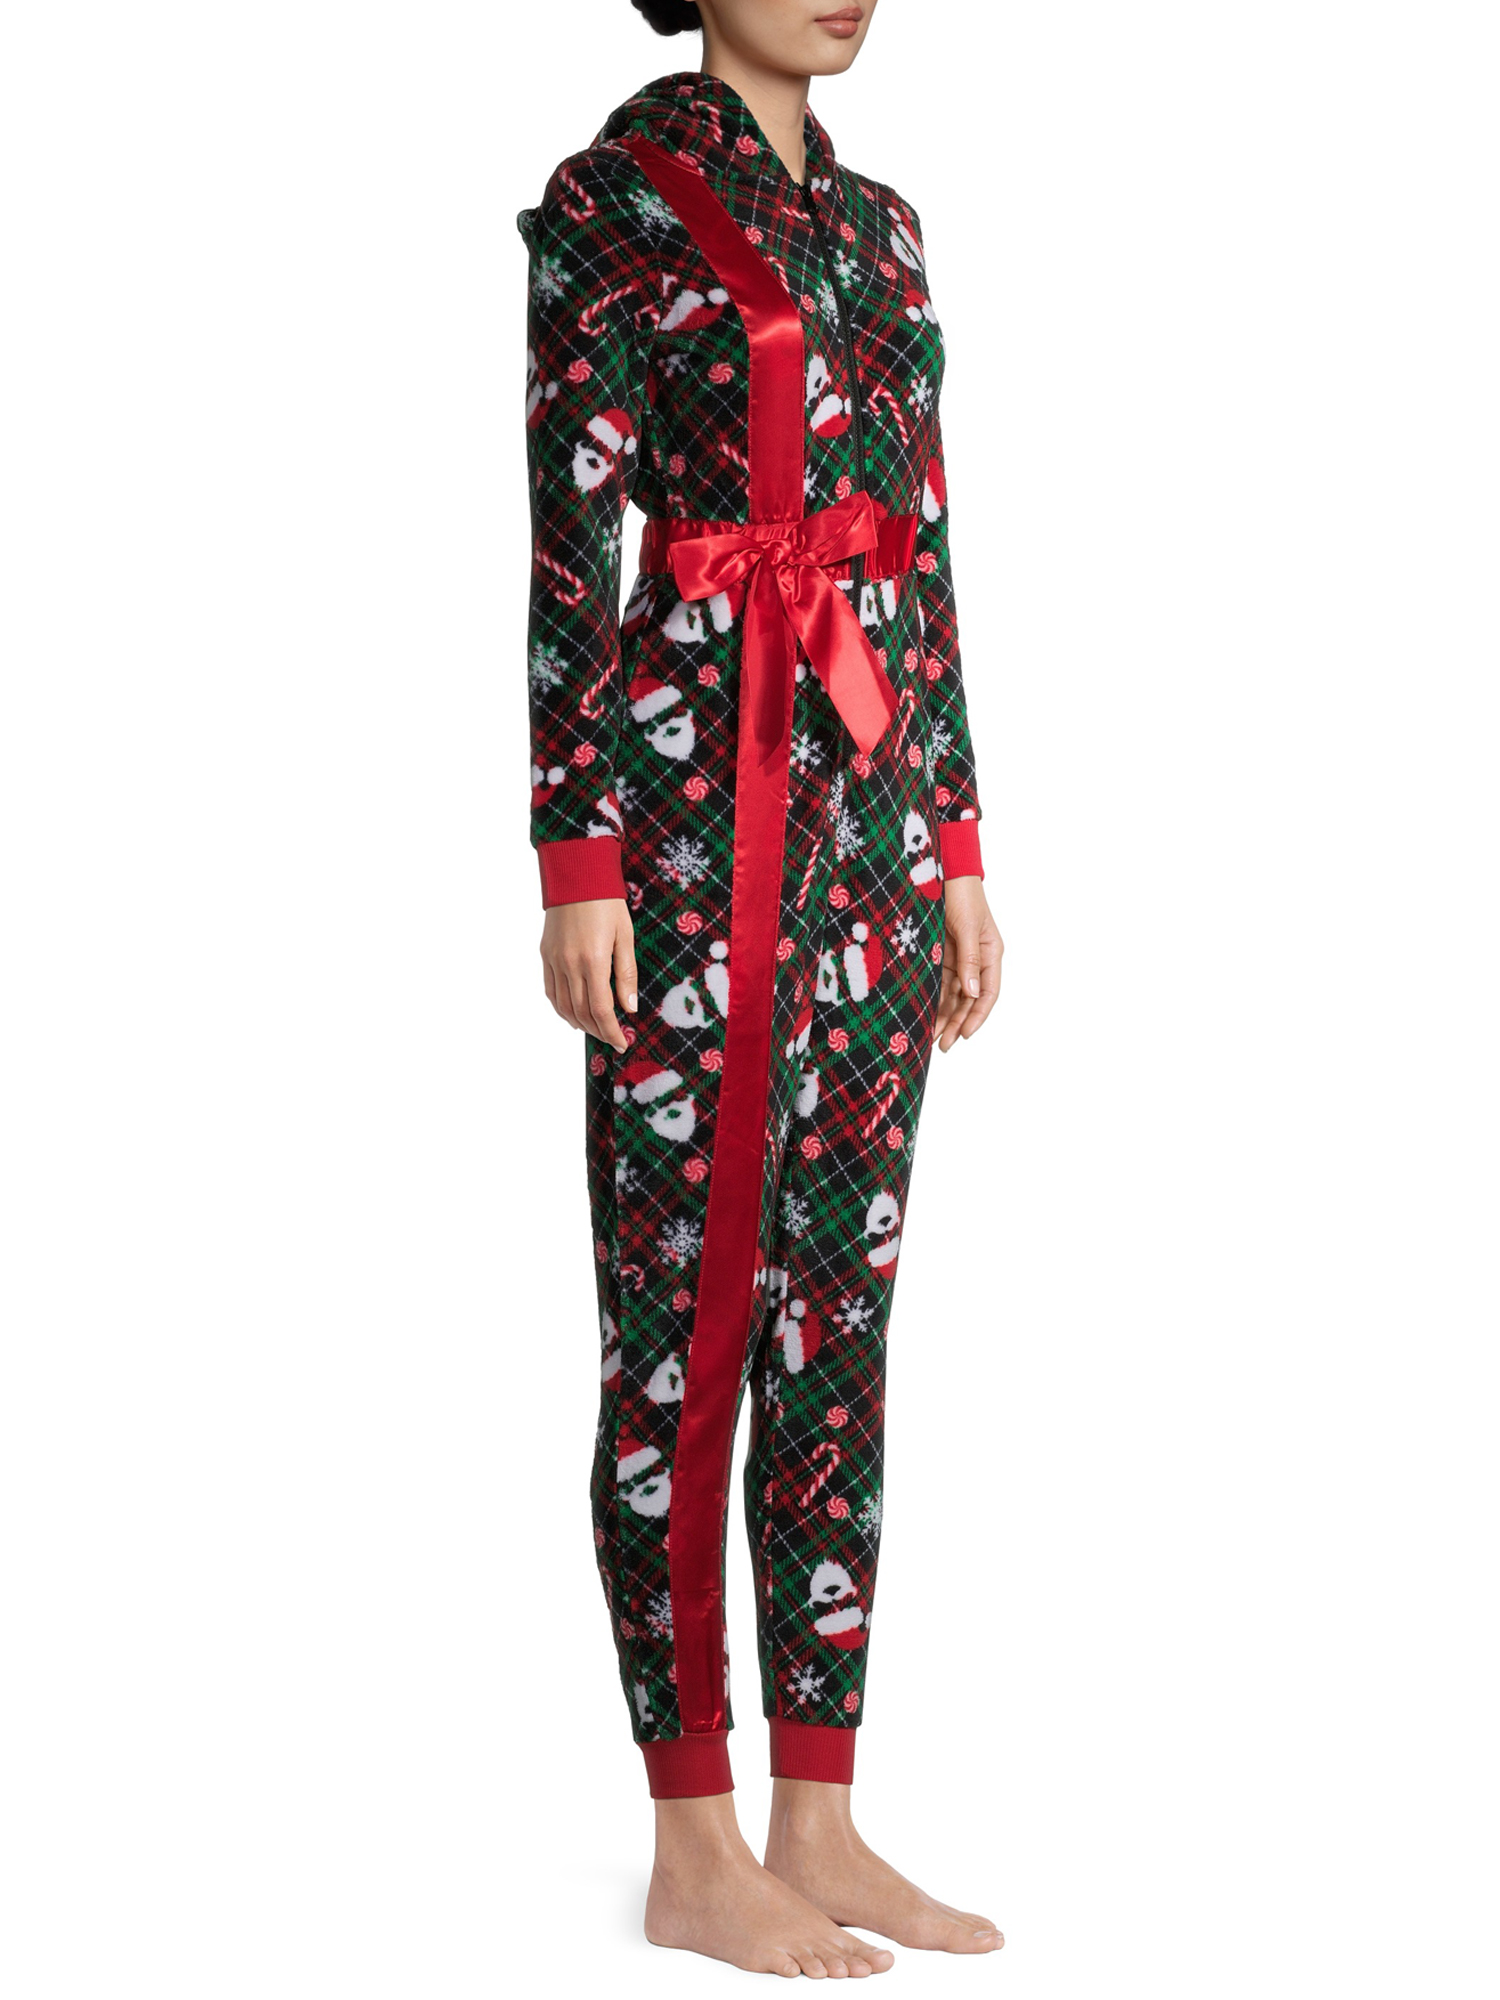 Derek Heart Women's and Women's Plus Christmas Present Pajamas Union Suit - image 3 of 6